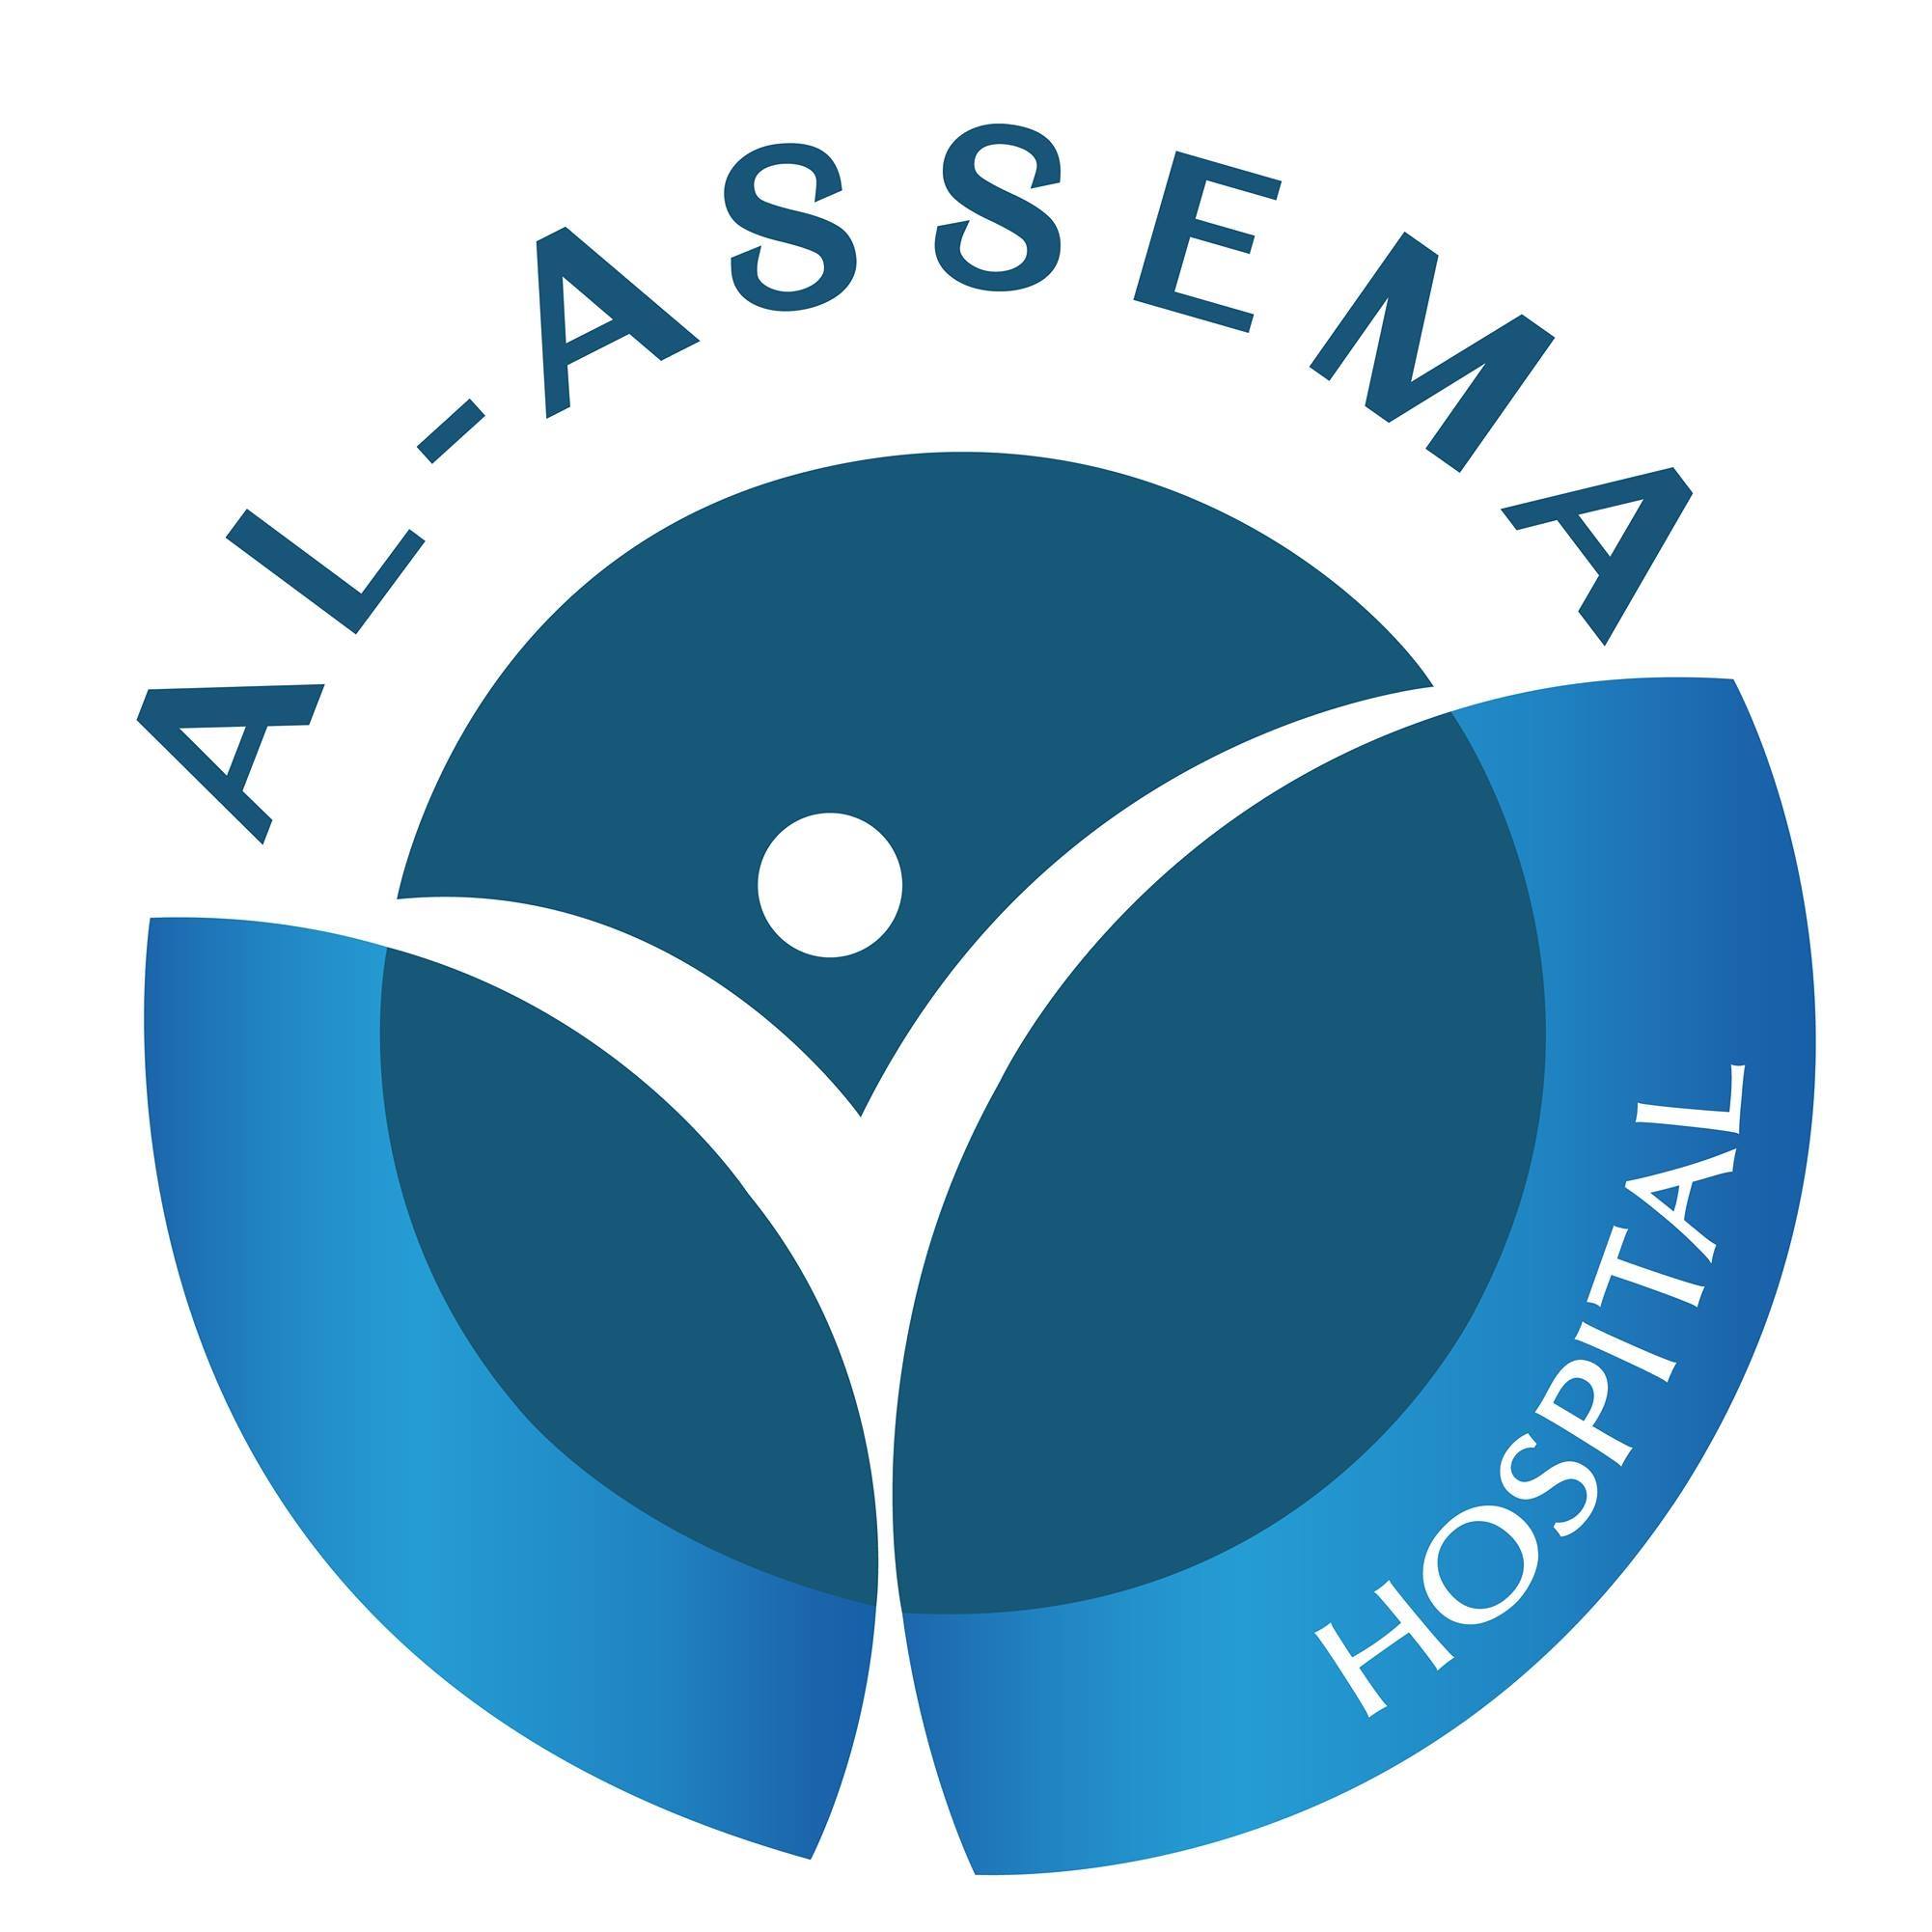 Al Assema Hospital